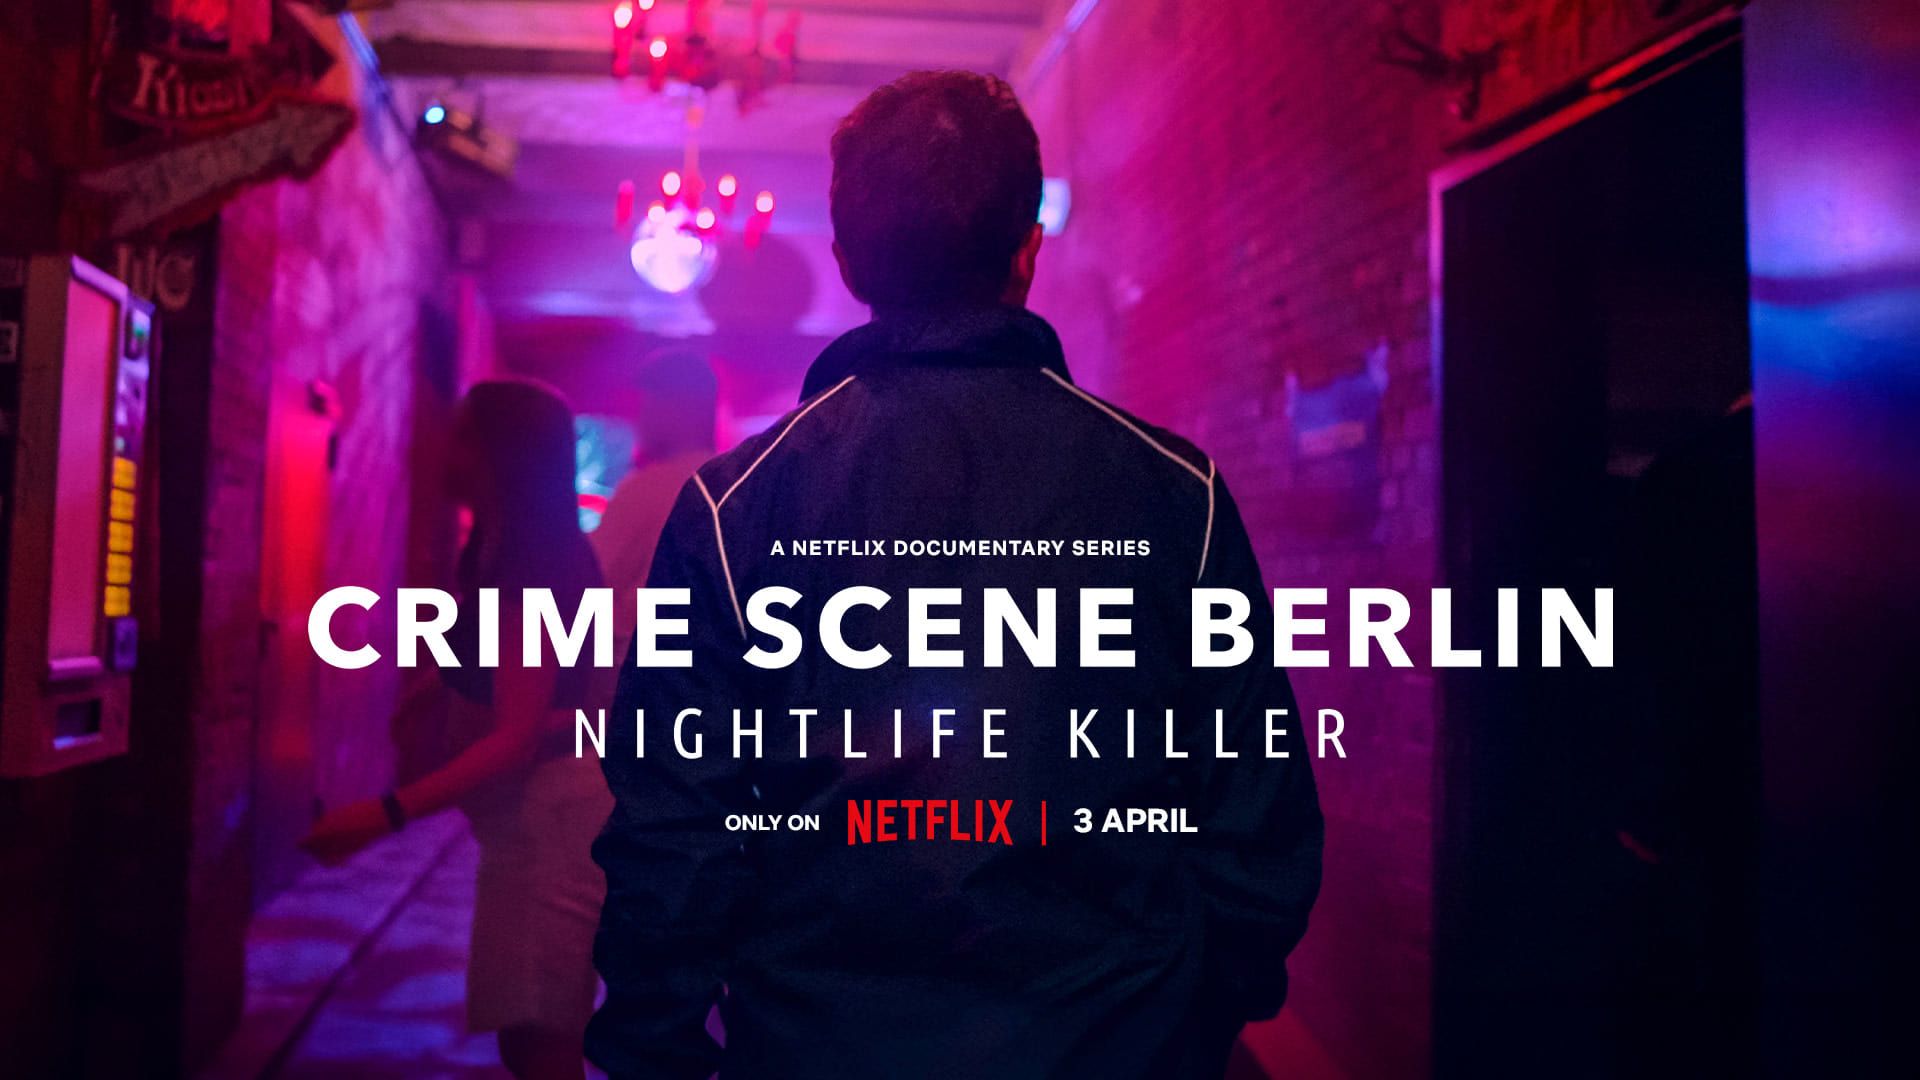 Cubierta de Escena del crimen: Muerte nocturna en Berlín